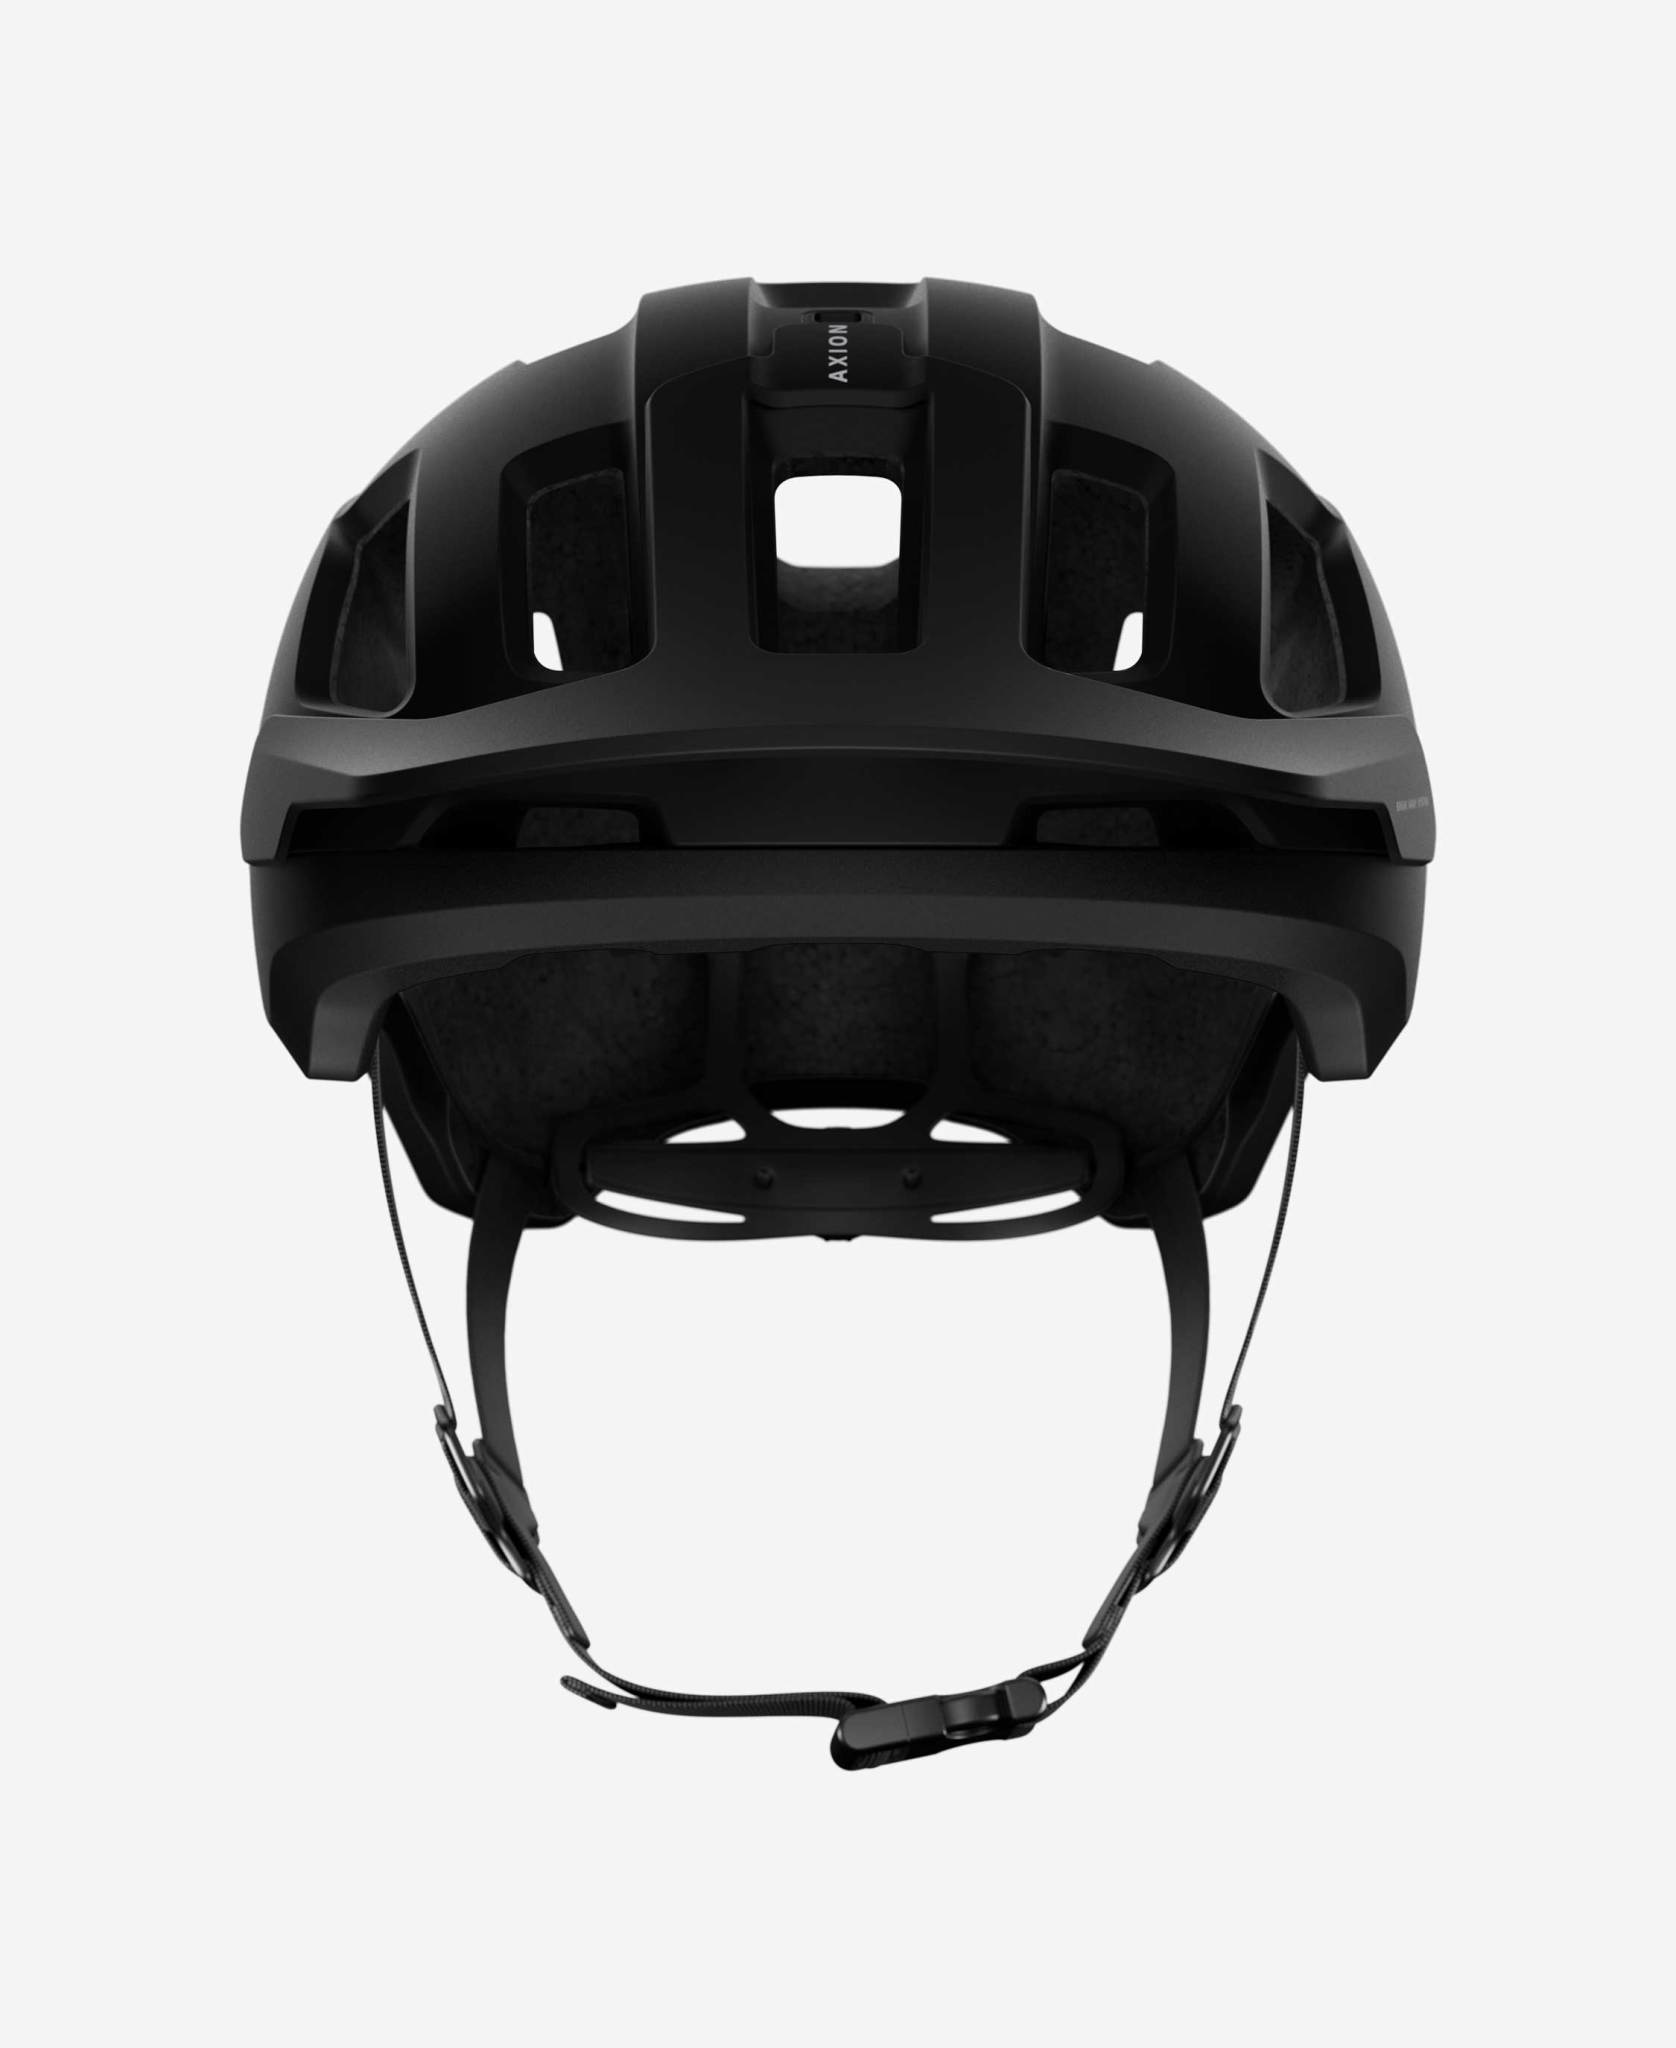 POC POC Axion Spin Mountain Bike Helmet